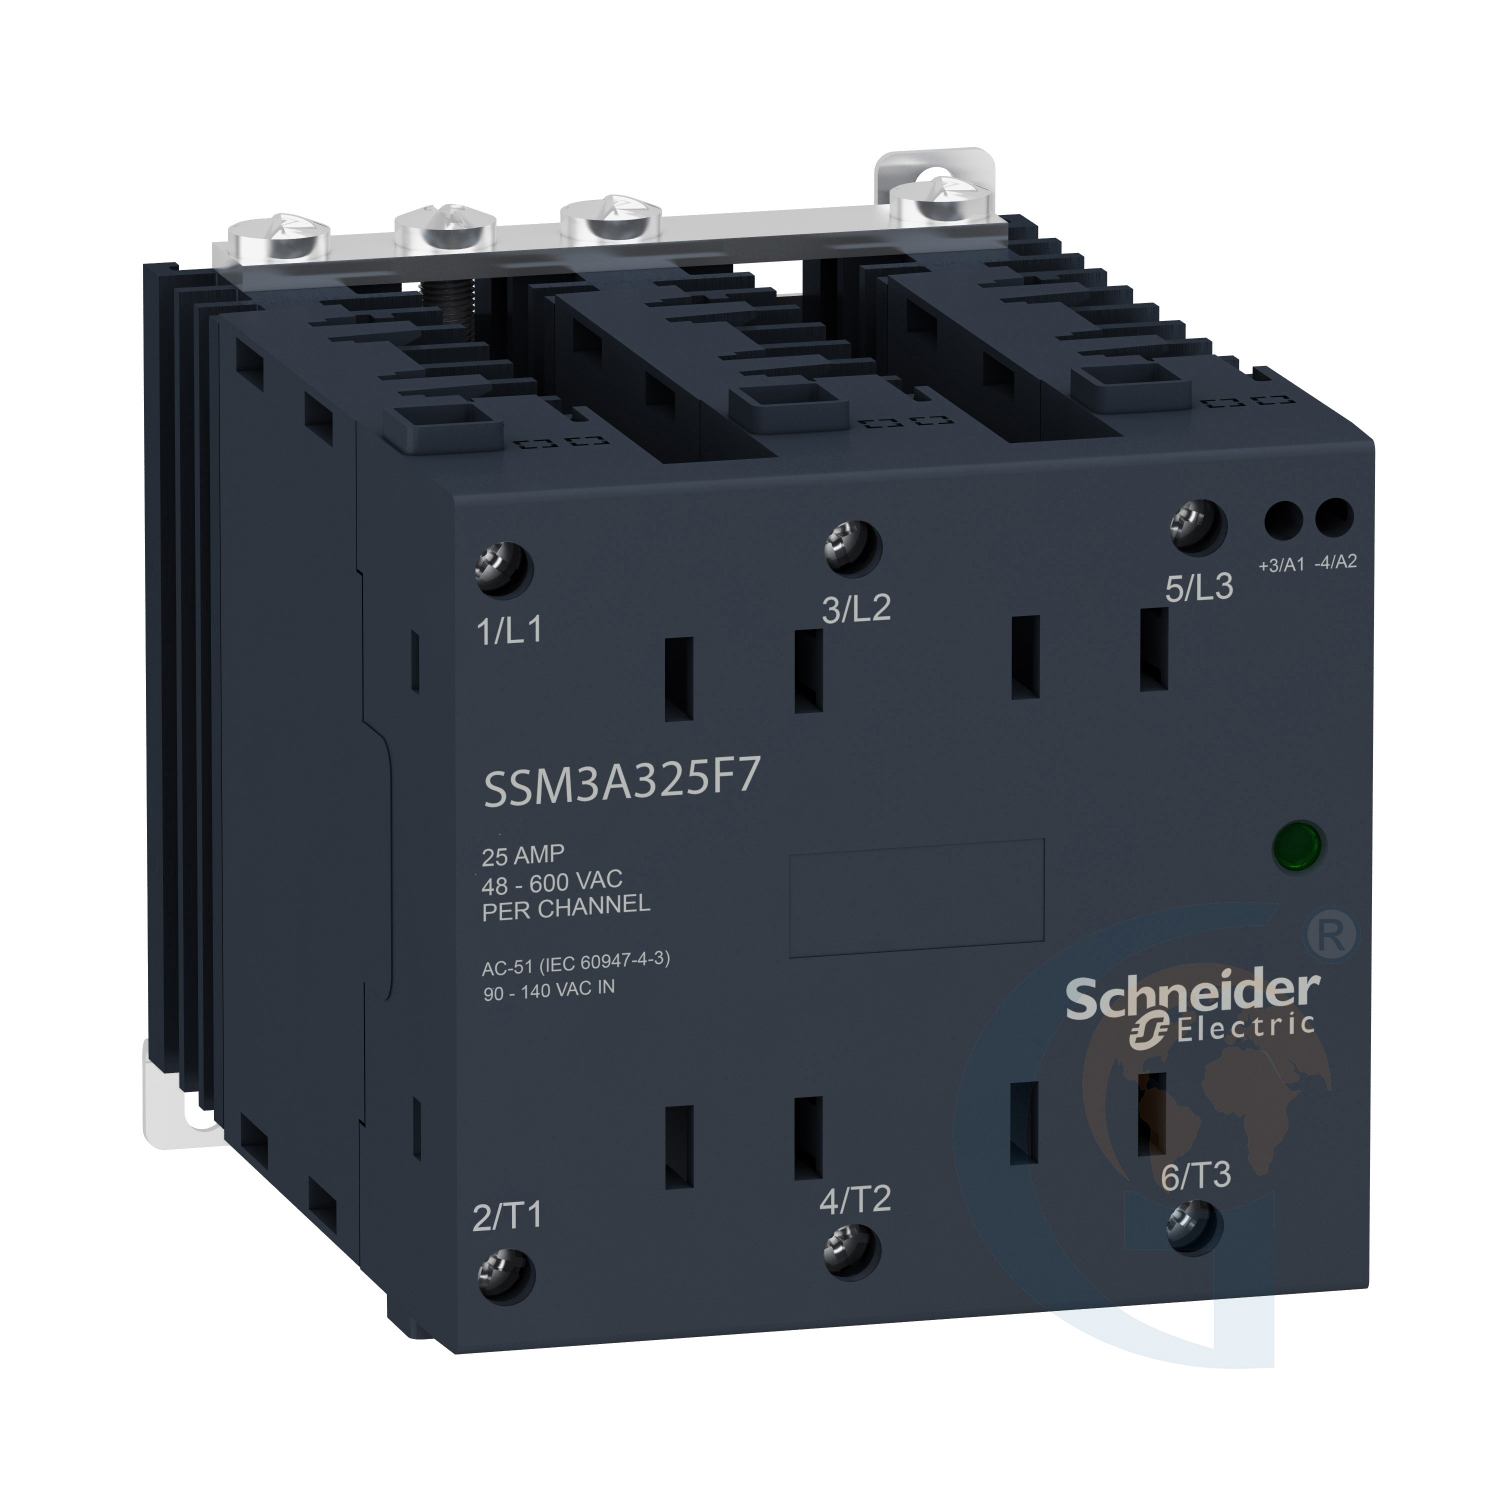 Schneider Electric SSM3A325P7 solid state relay – DIN rail mount – input 180-280Vac, output 48-600Vac, 25A https://gesrepair.com/wp-content/uploads/2020/Schneider/Schneider_Electric_SSM3A325P7_.jpg